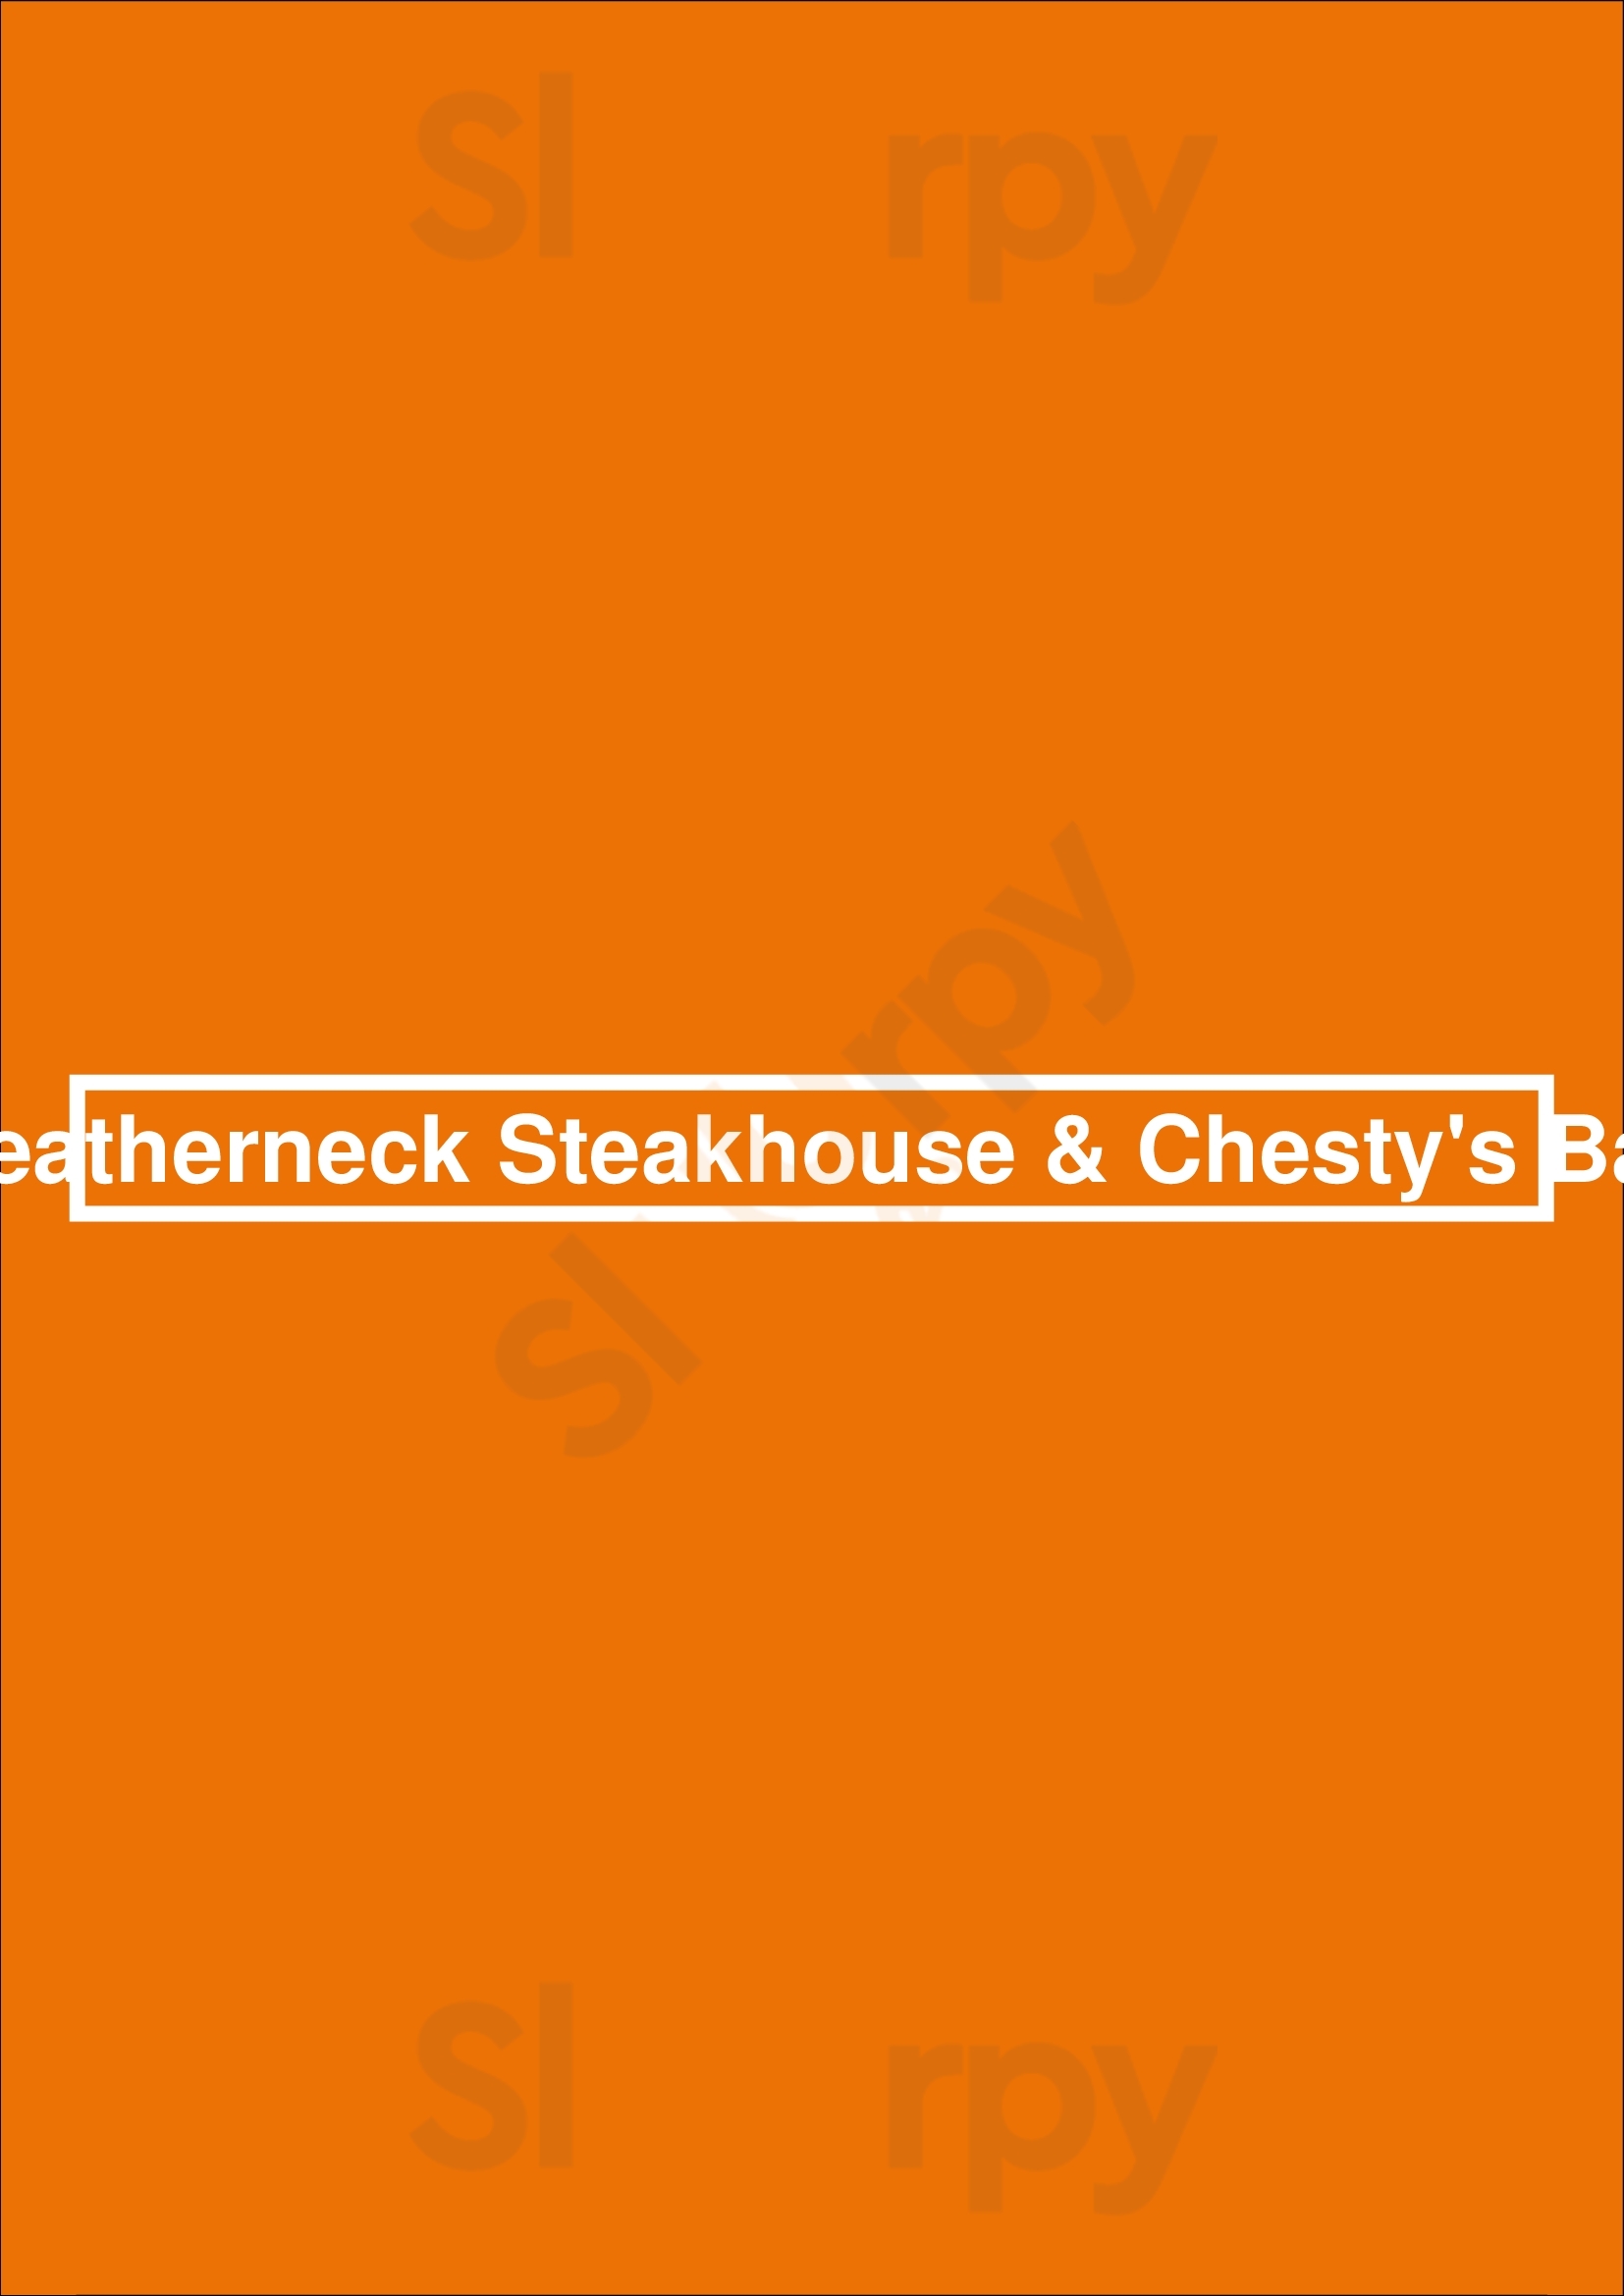 Leatherneck Steakhouse & Chesty's Bar San Francisco Menu - 1